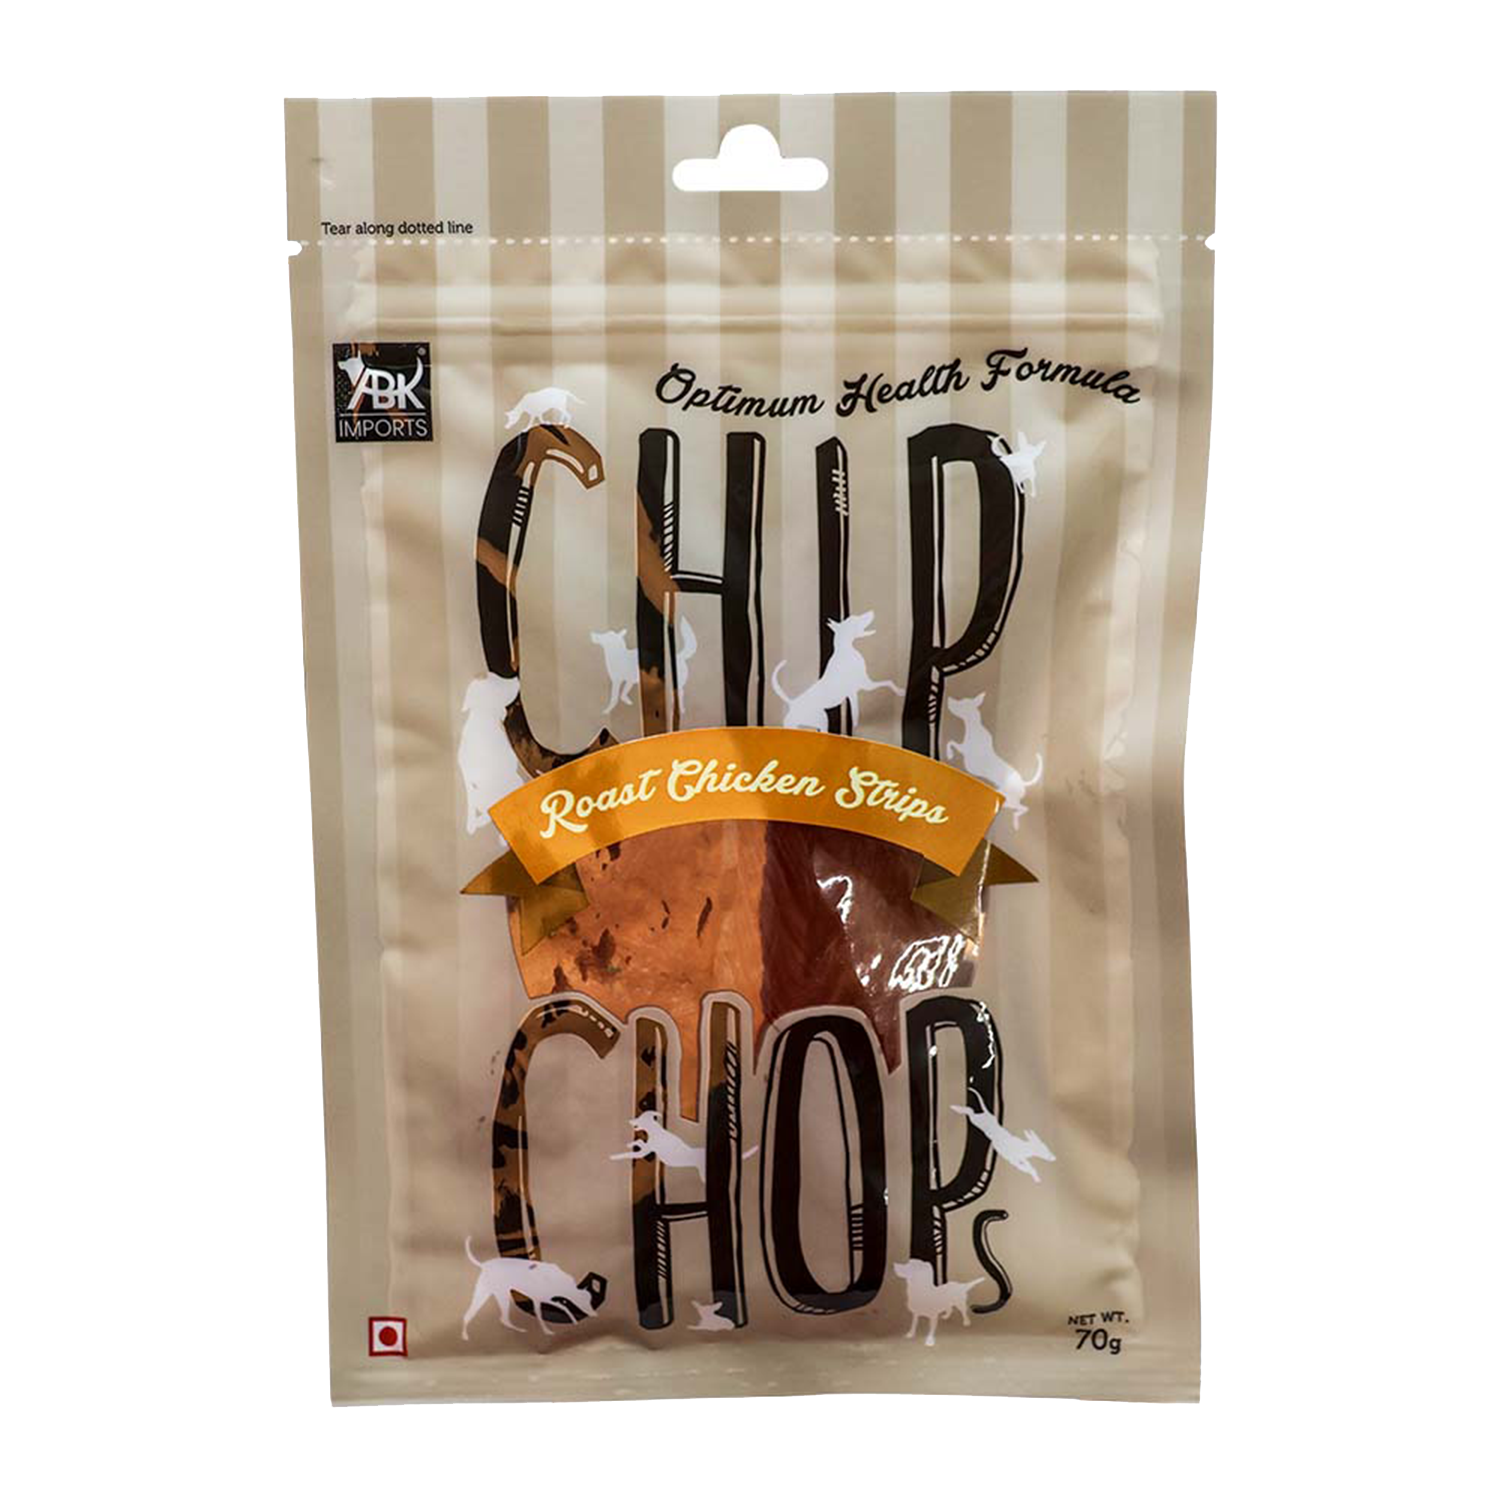 Chip Chops Roast Chicken Strips F